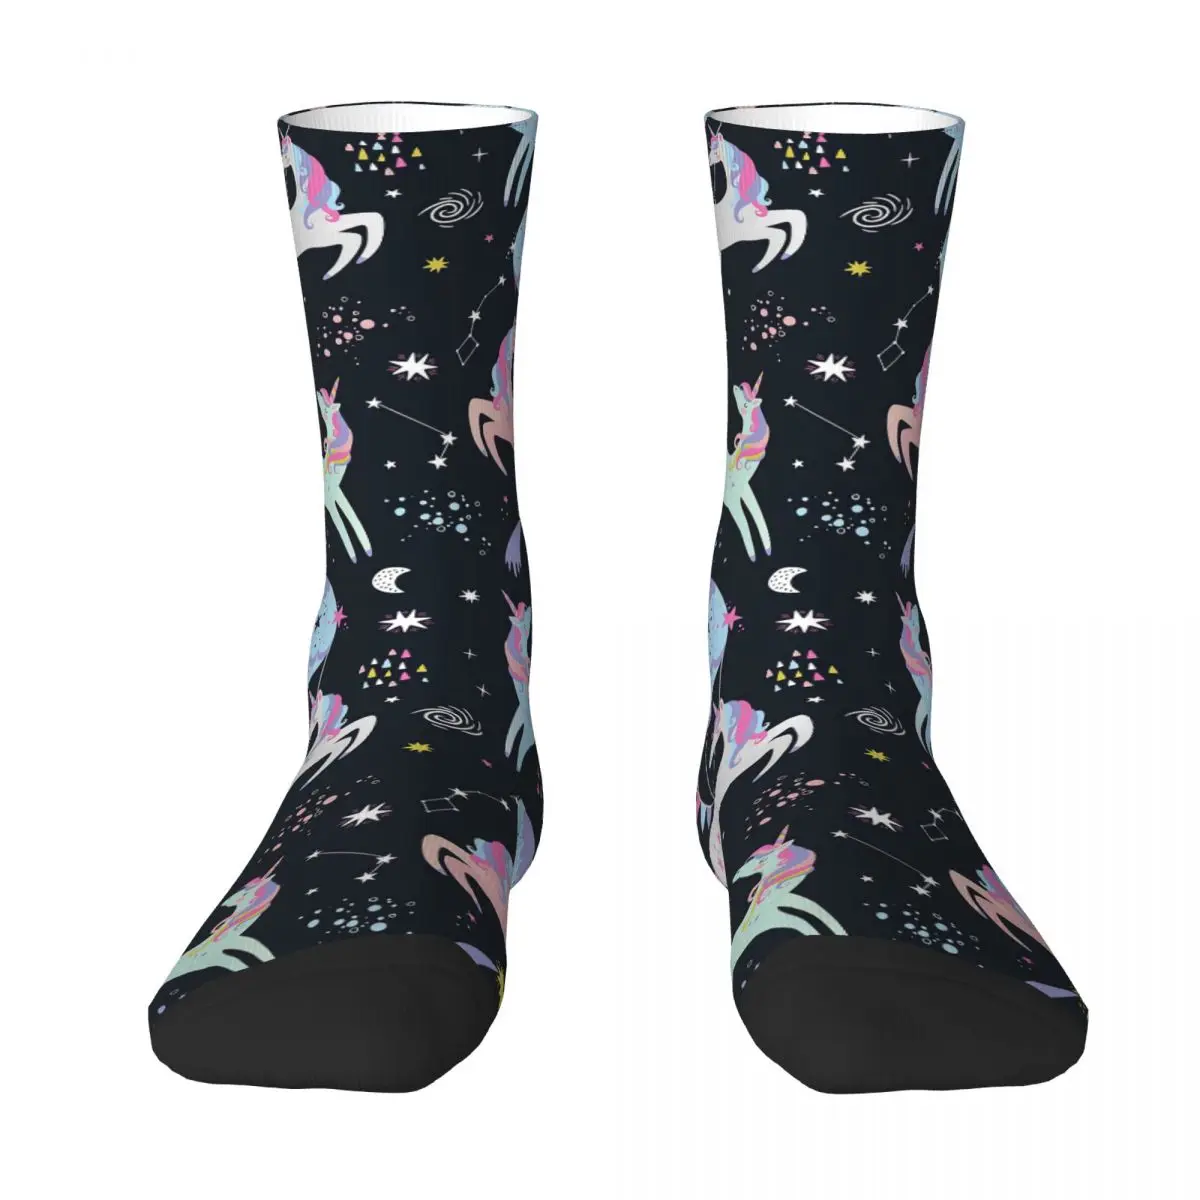 Childish Seamless Pattern With Unicorns Adult Socks,Unisex socks,men Socks women Socks